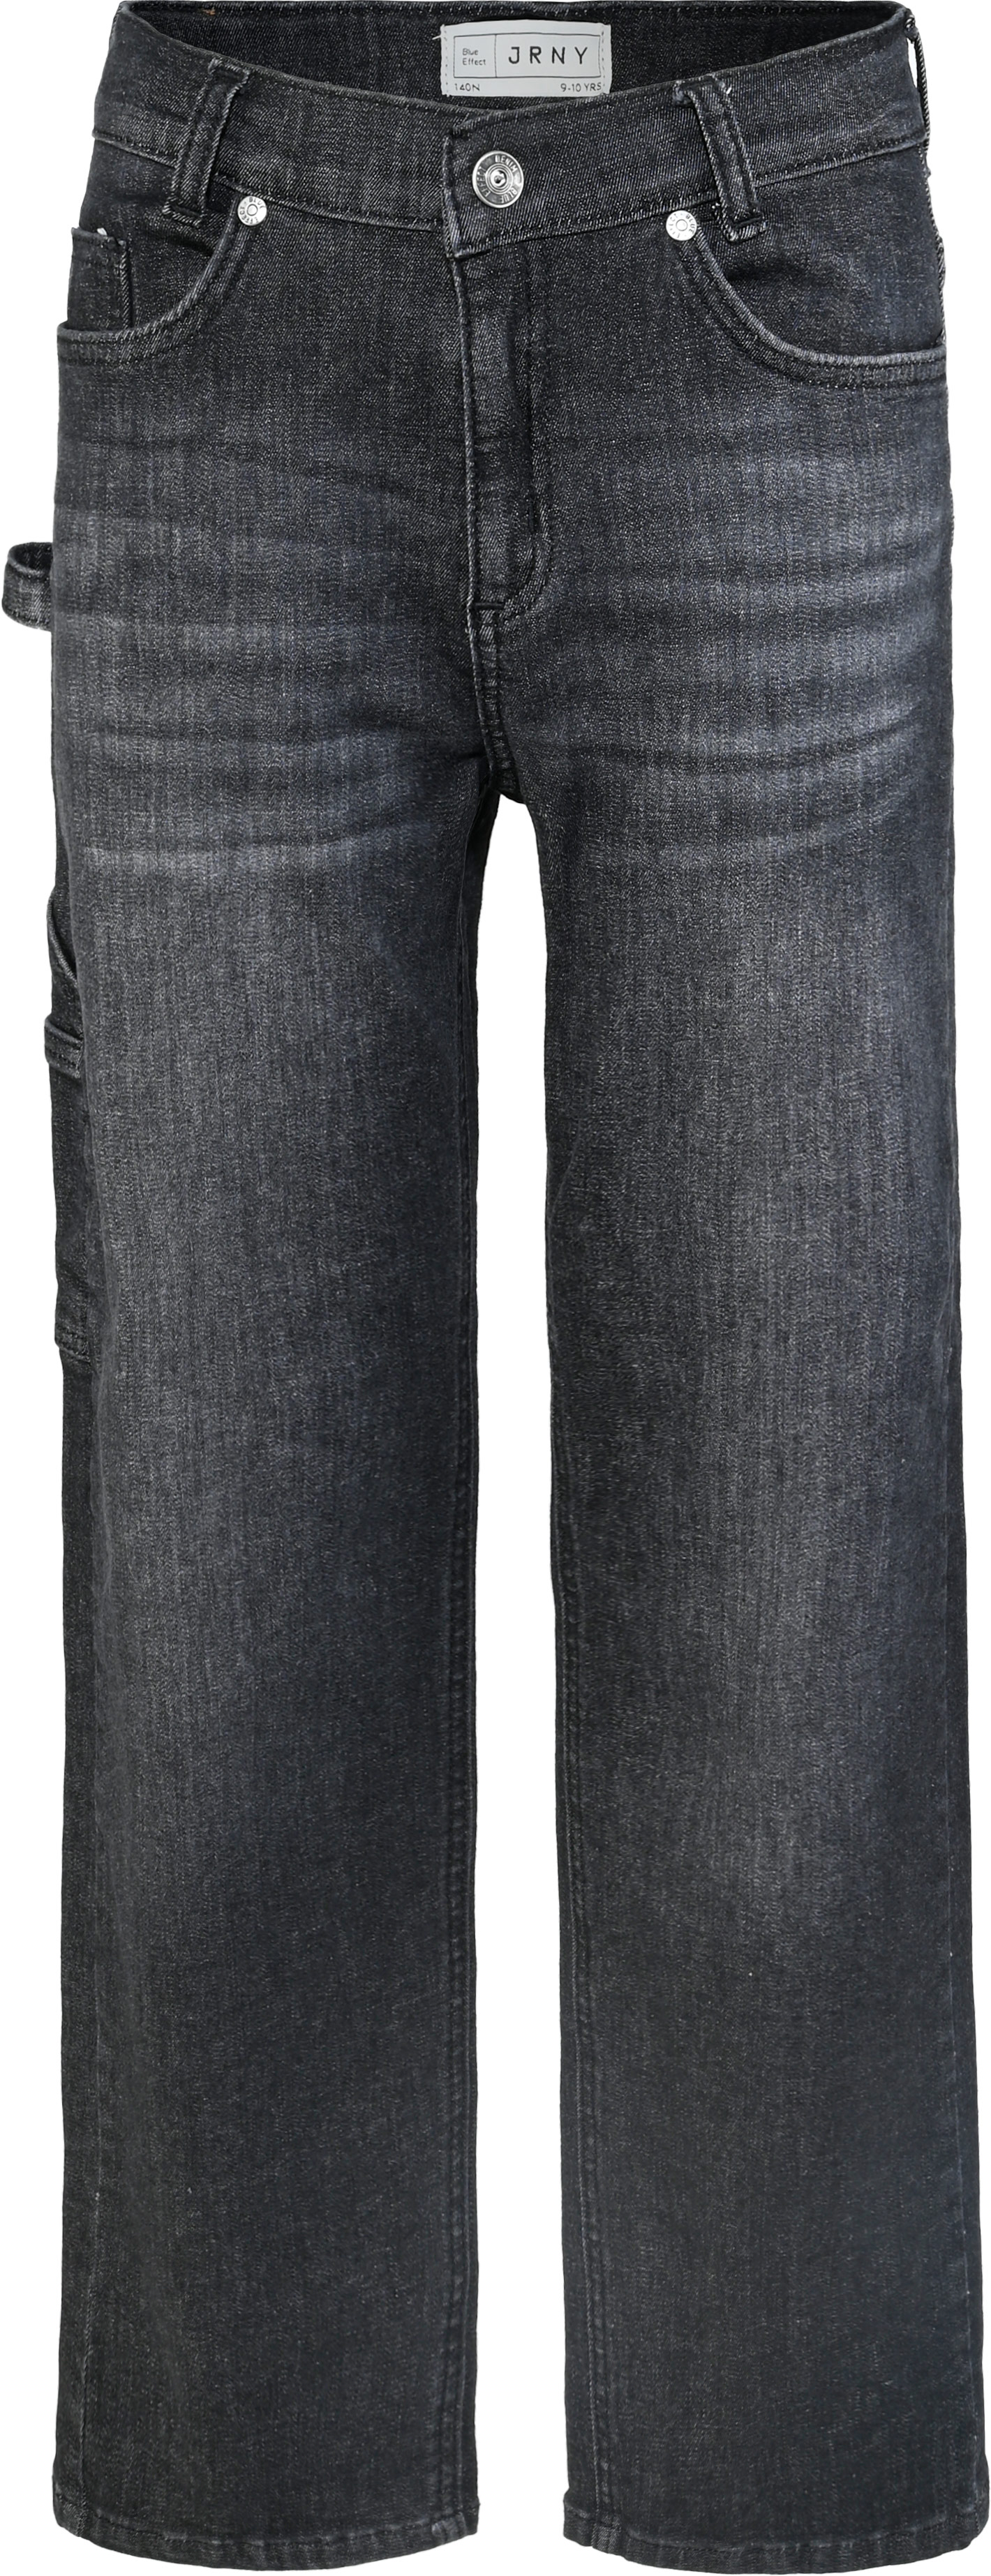 2866-Boys Baggy Jeans Workerstyle, verfügbar in Normal